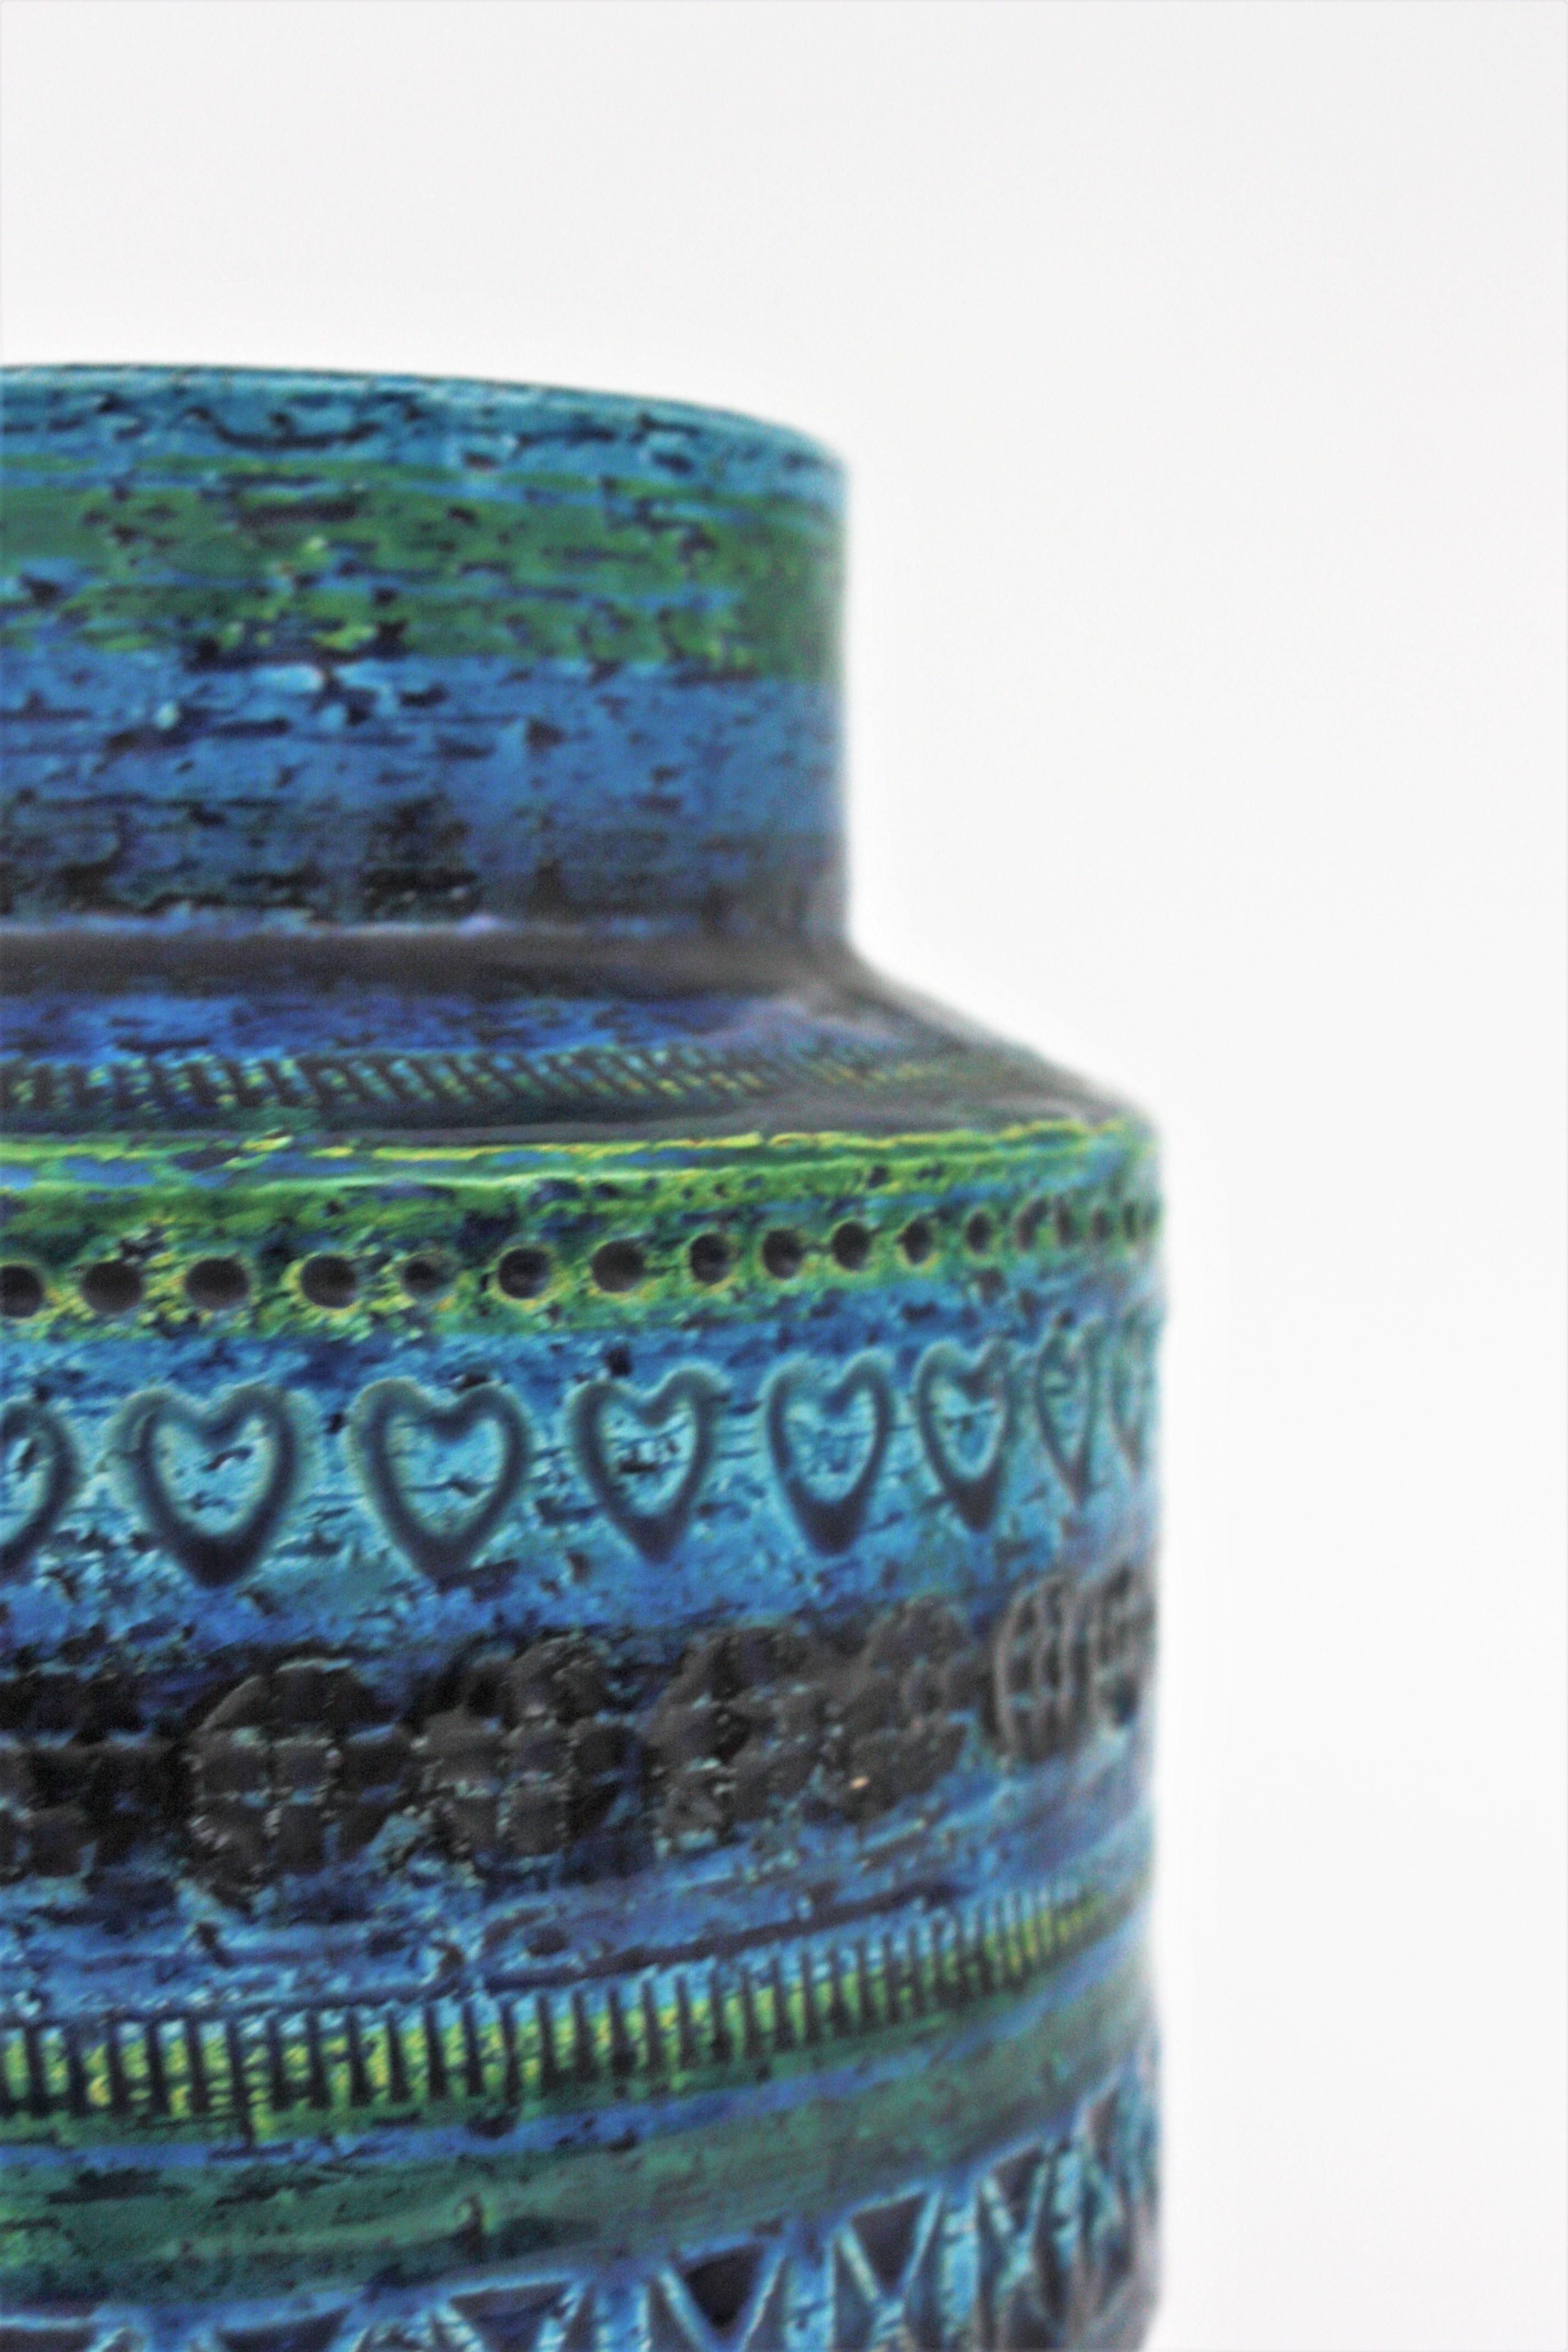 Bitossi Aldo Londi Rimini Blaue Keramikvase auf Sterlingsilbersockel, 1960er Jahre im Angebot 3